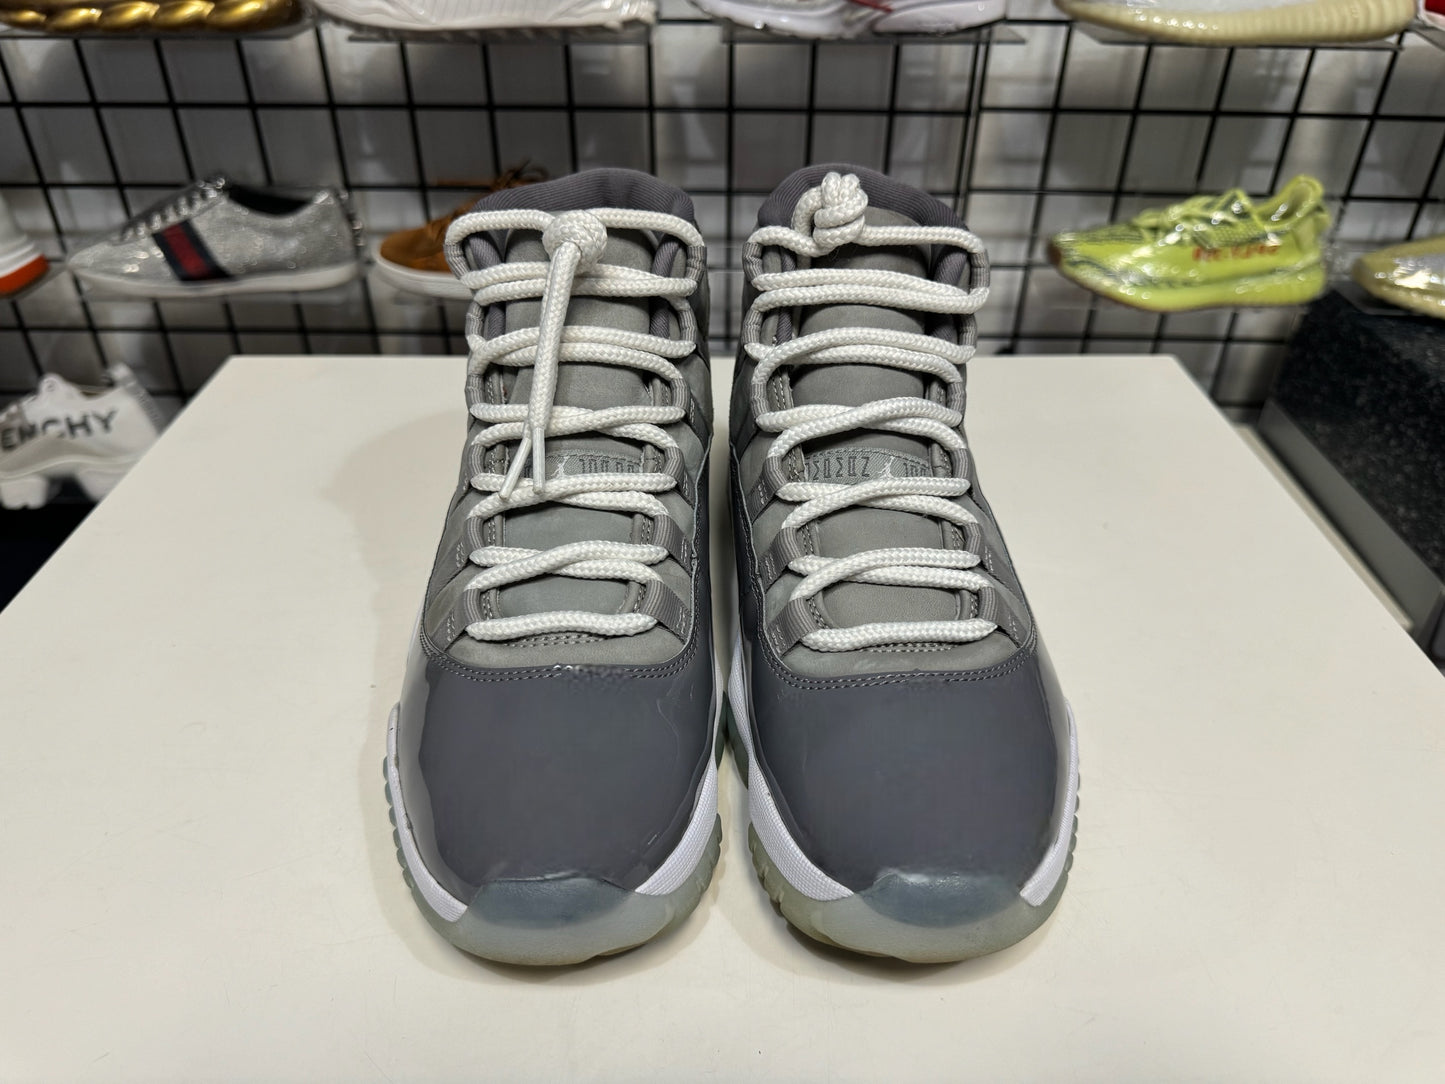 Jordan 11 Cool Grey 2021 size 8.5